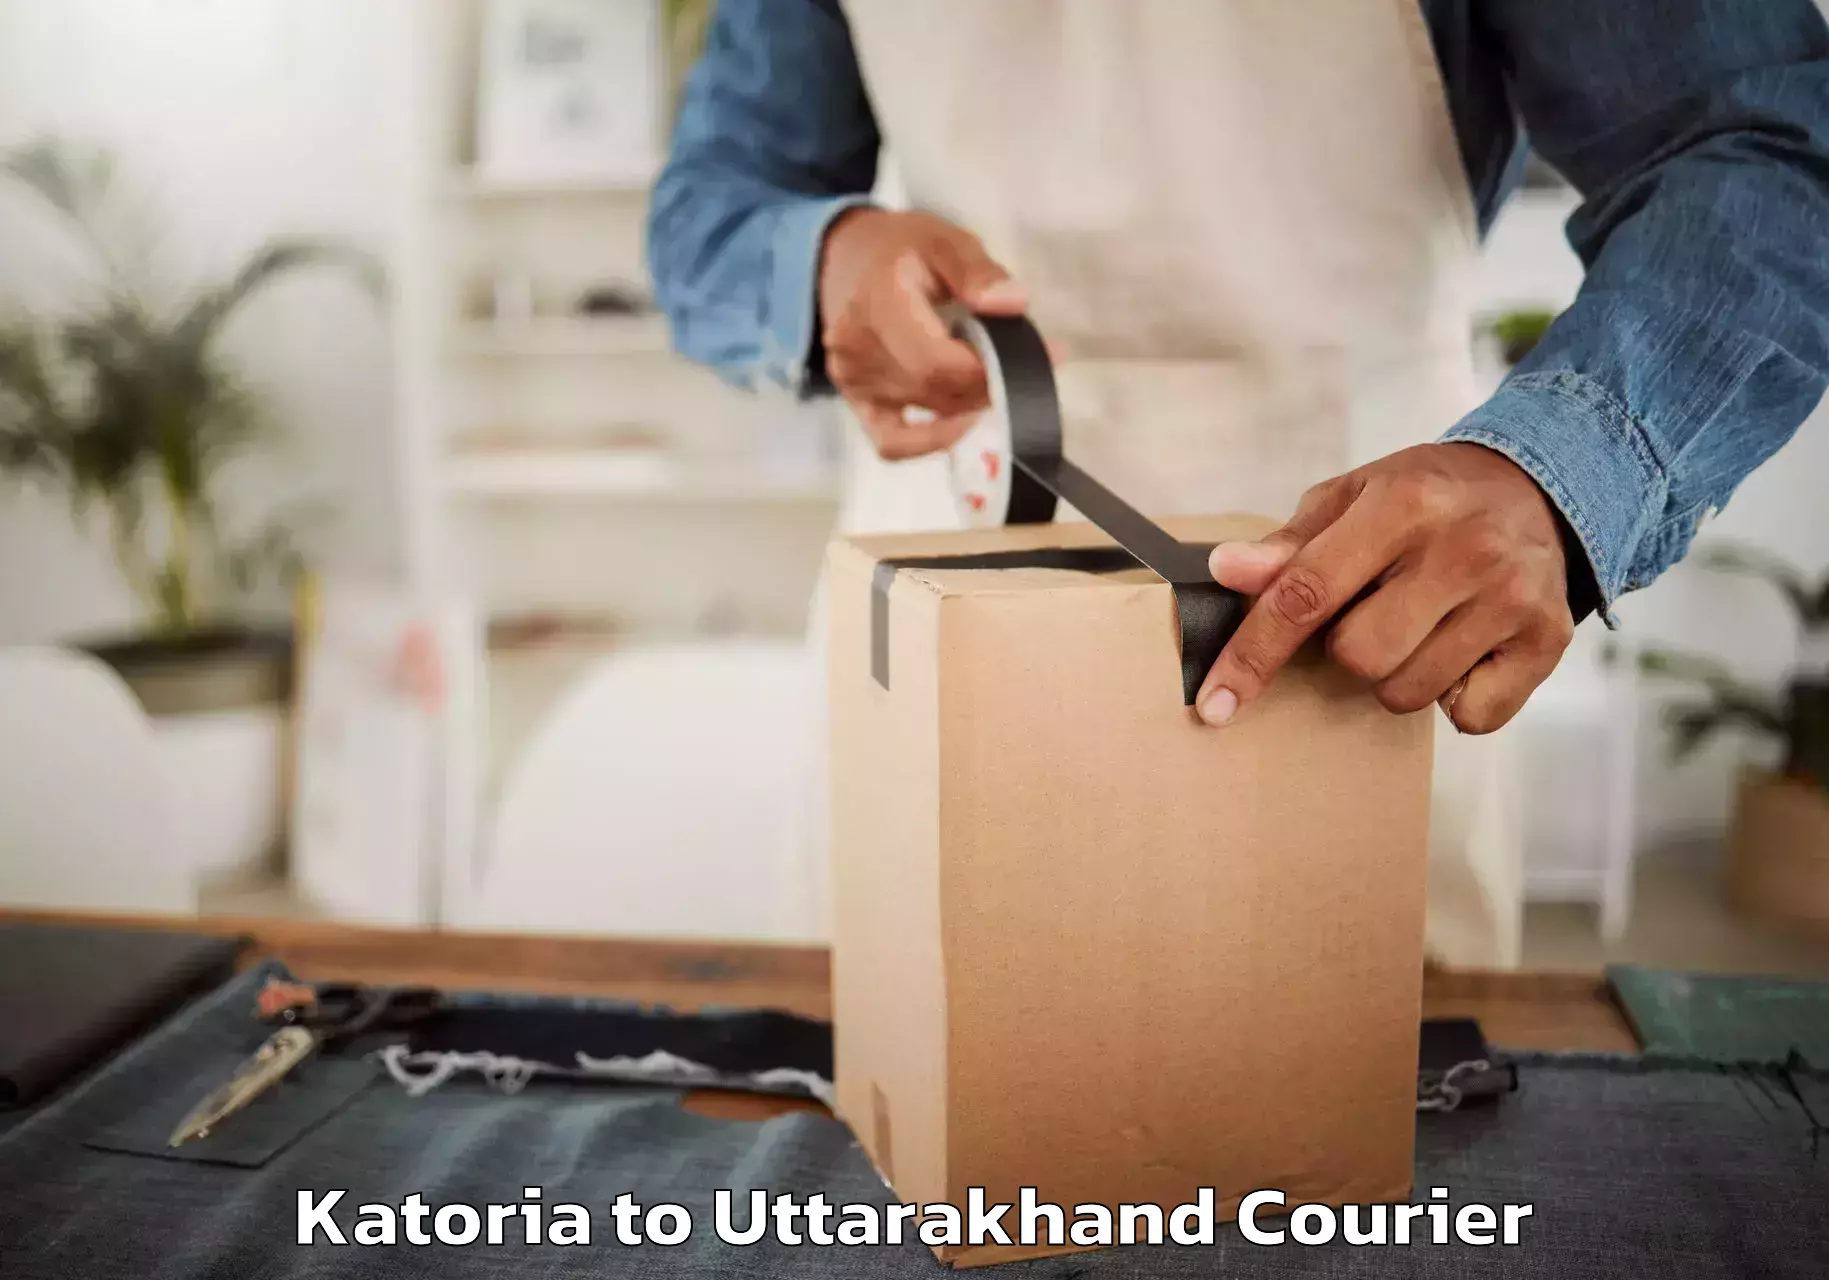 Professional furniture movers Katoria to Rishikesh